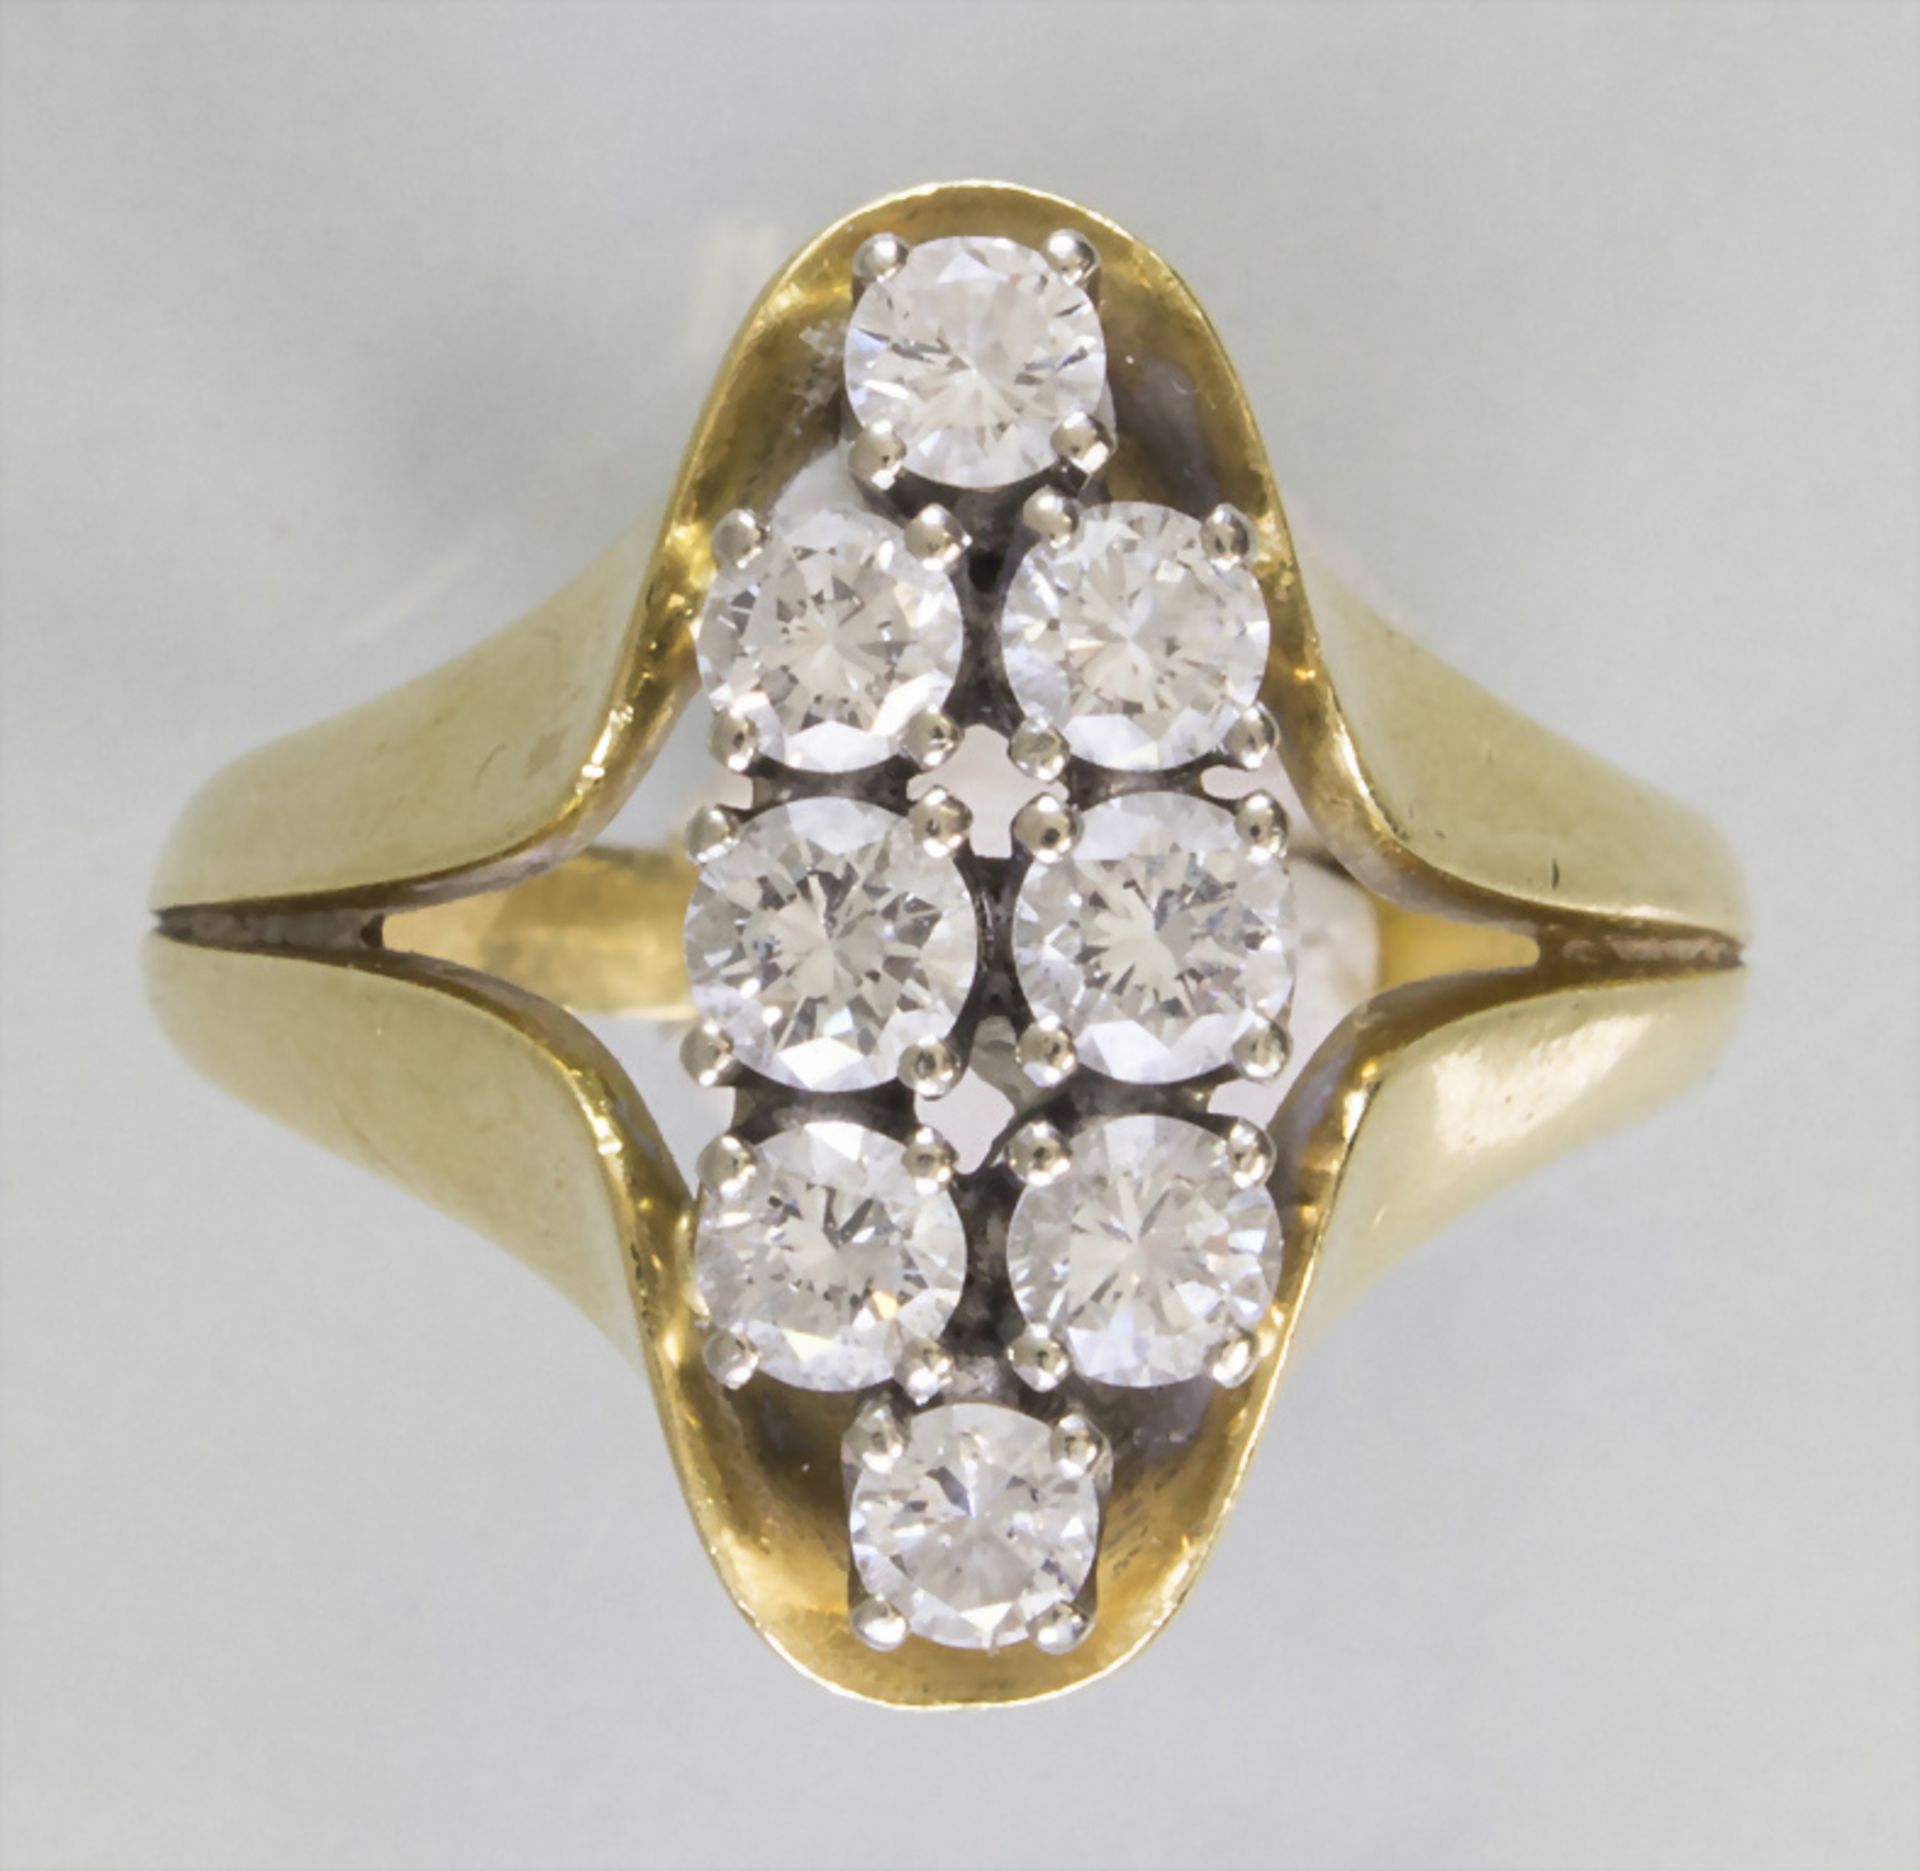 Damenring in Gelbgold mit Diamanten / A ladies 18k gold ring with diamonds